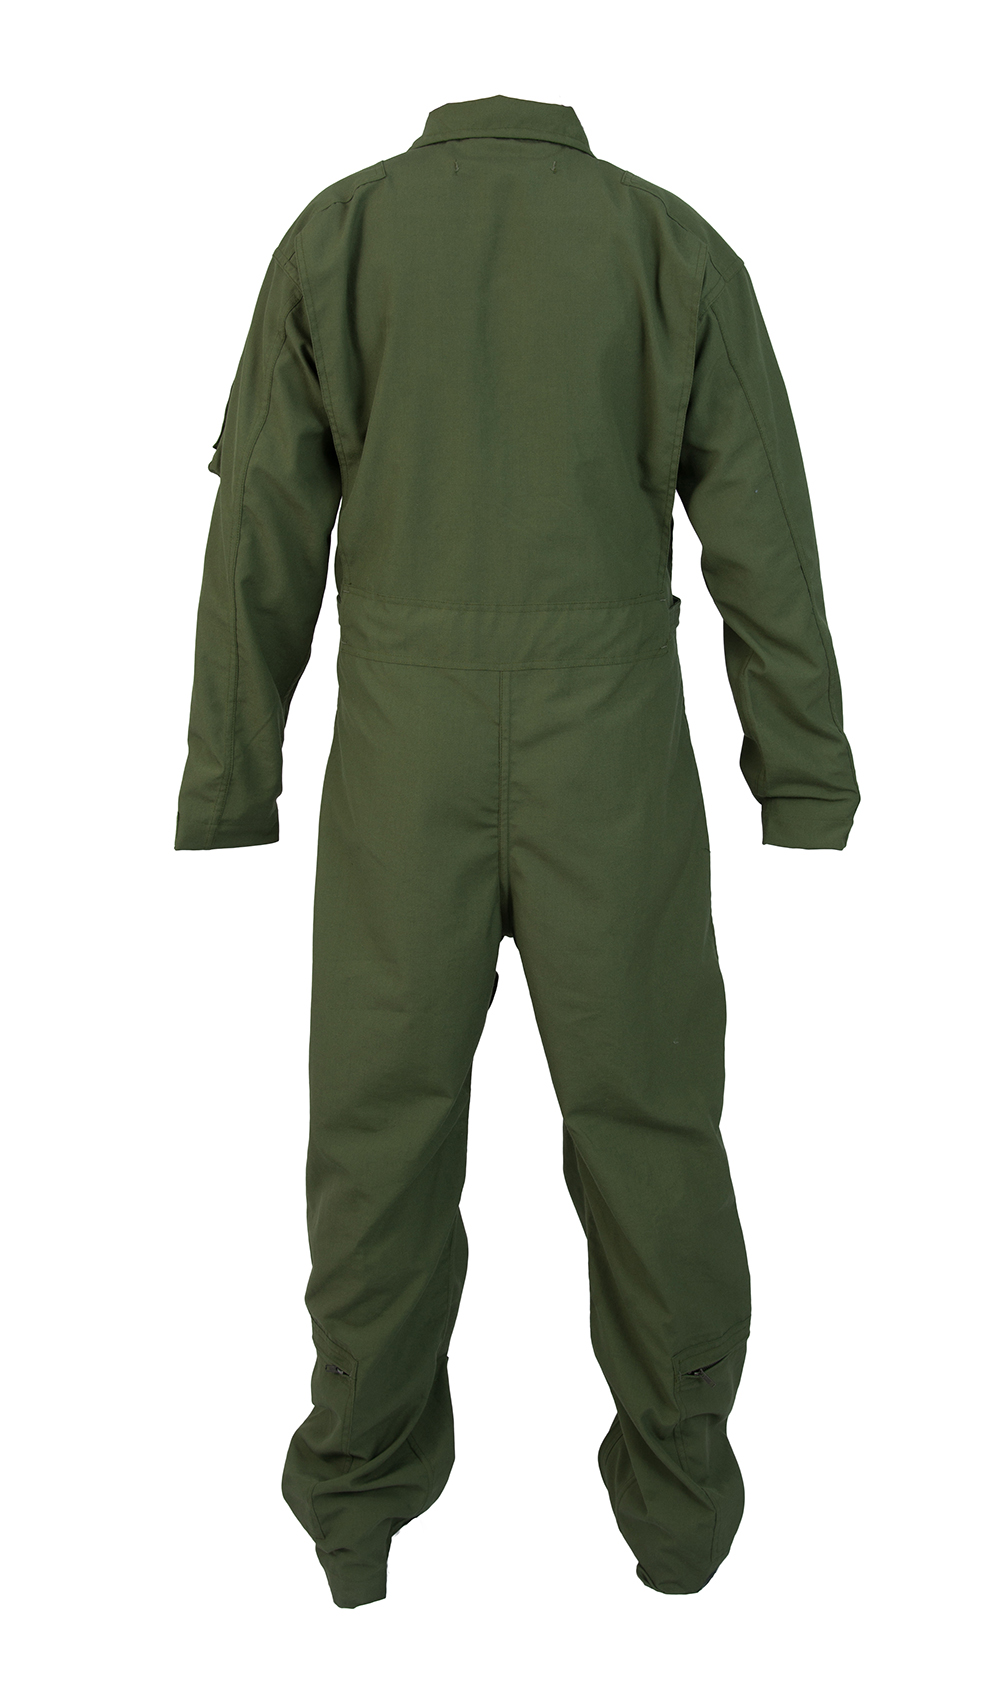 CWU-27/P Flight Suit | Valley Apparel LLC